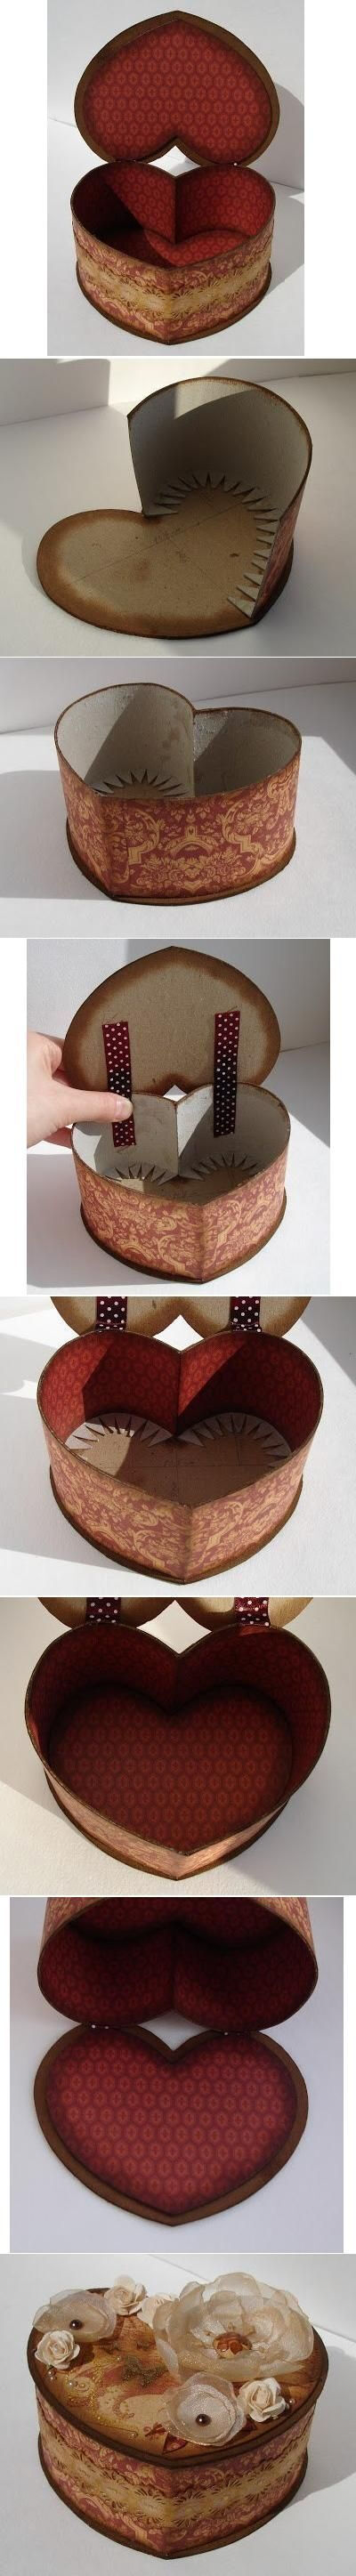 DIY-Heart Shaped Box